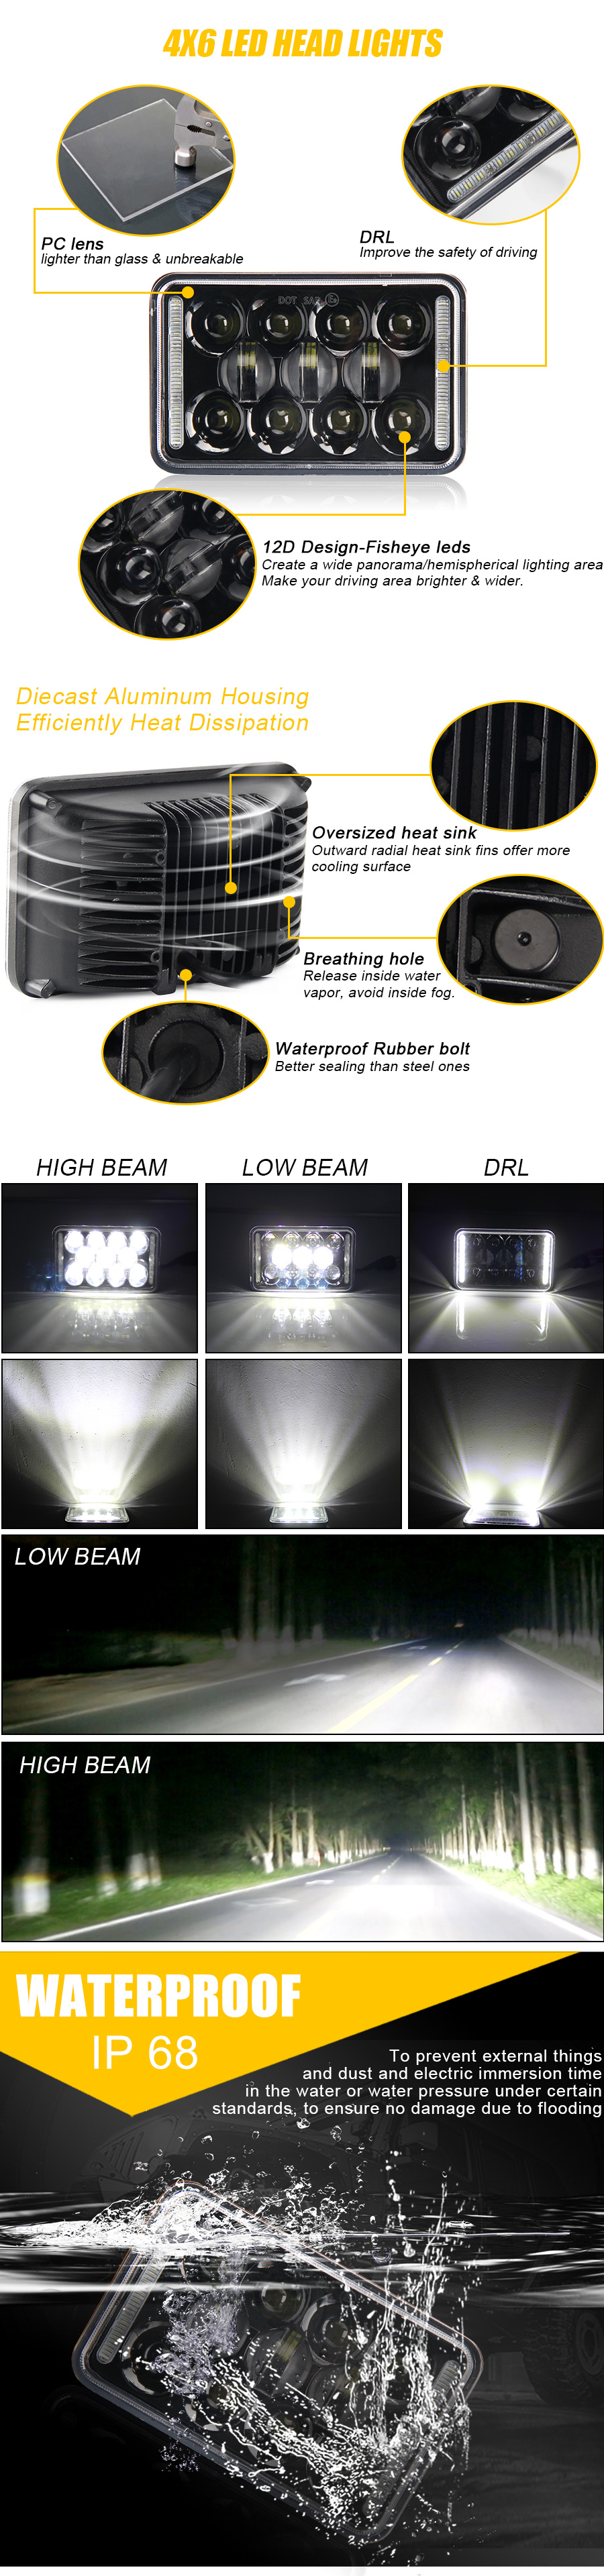 led headlight 1002WM advantages